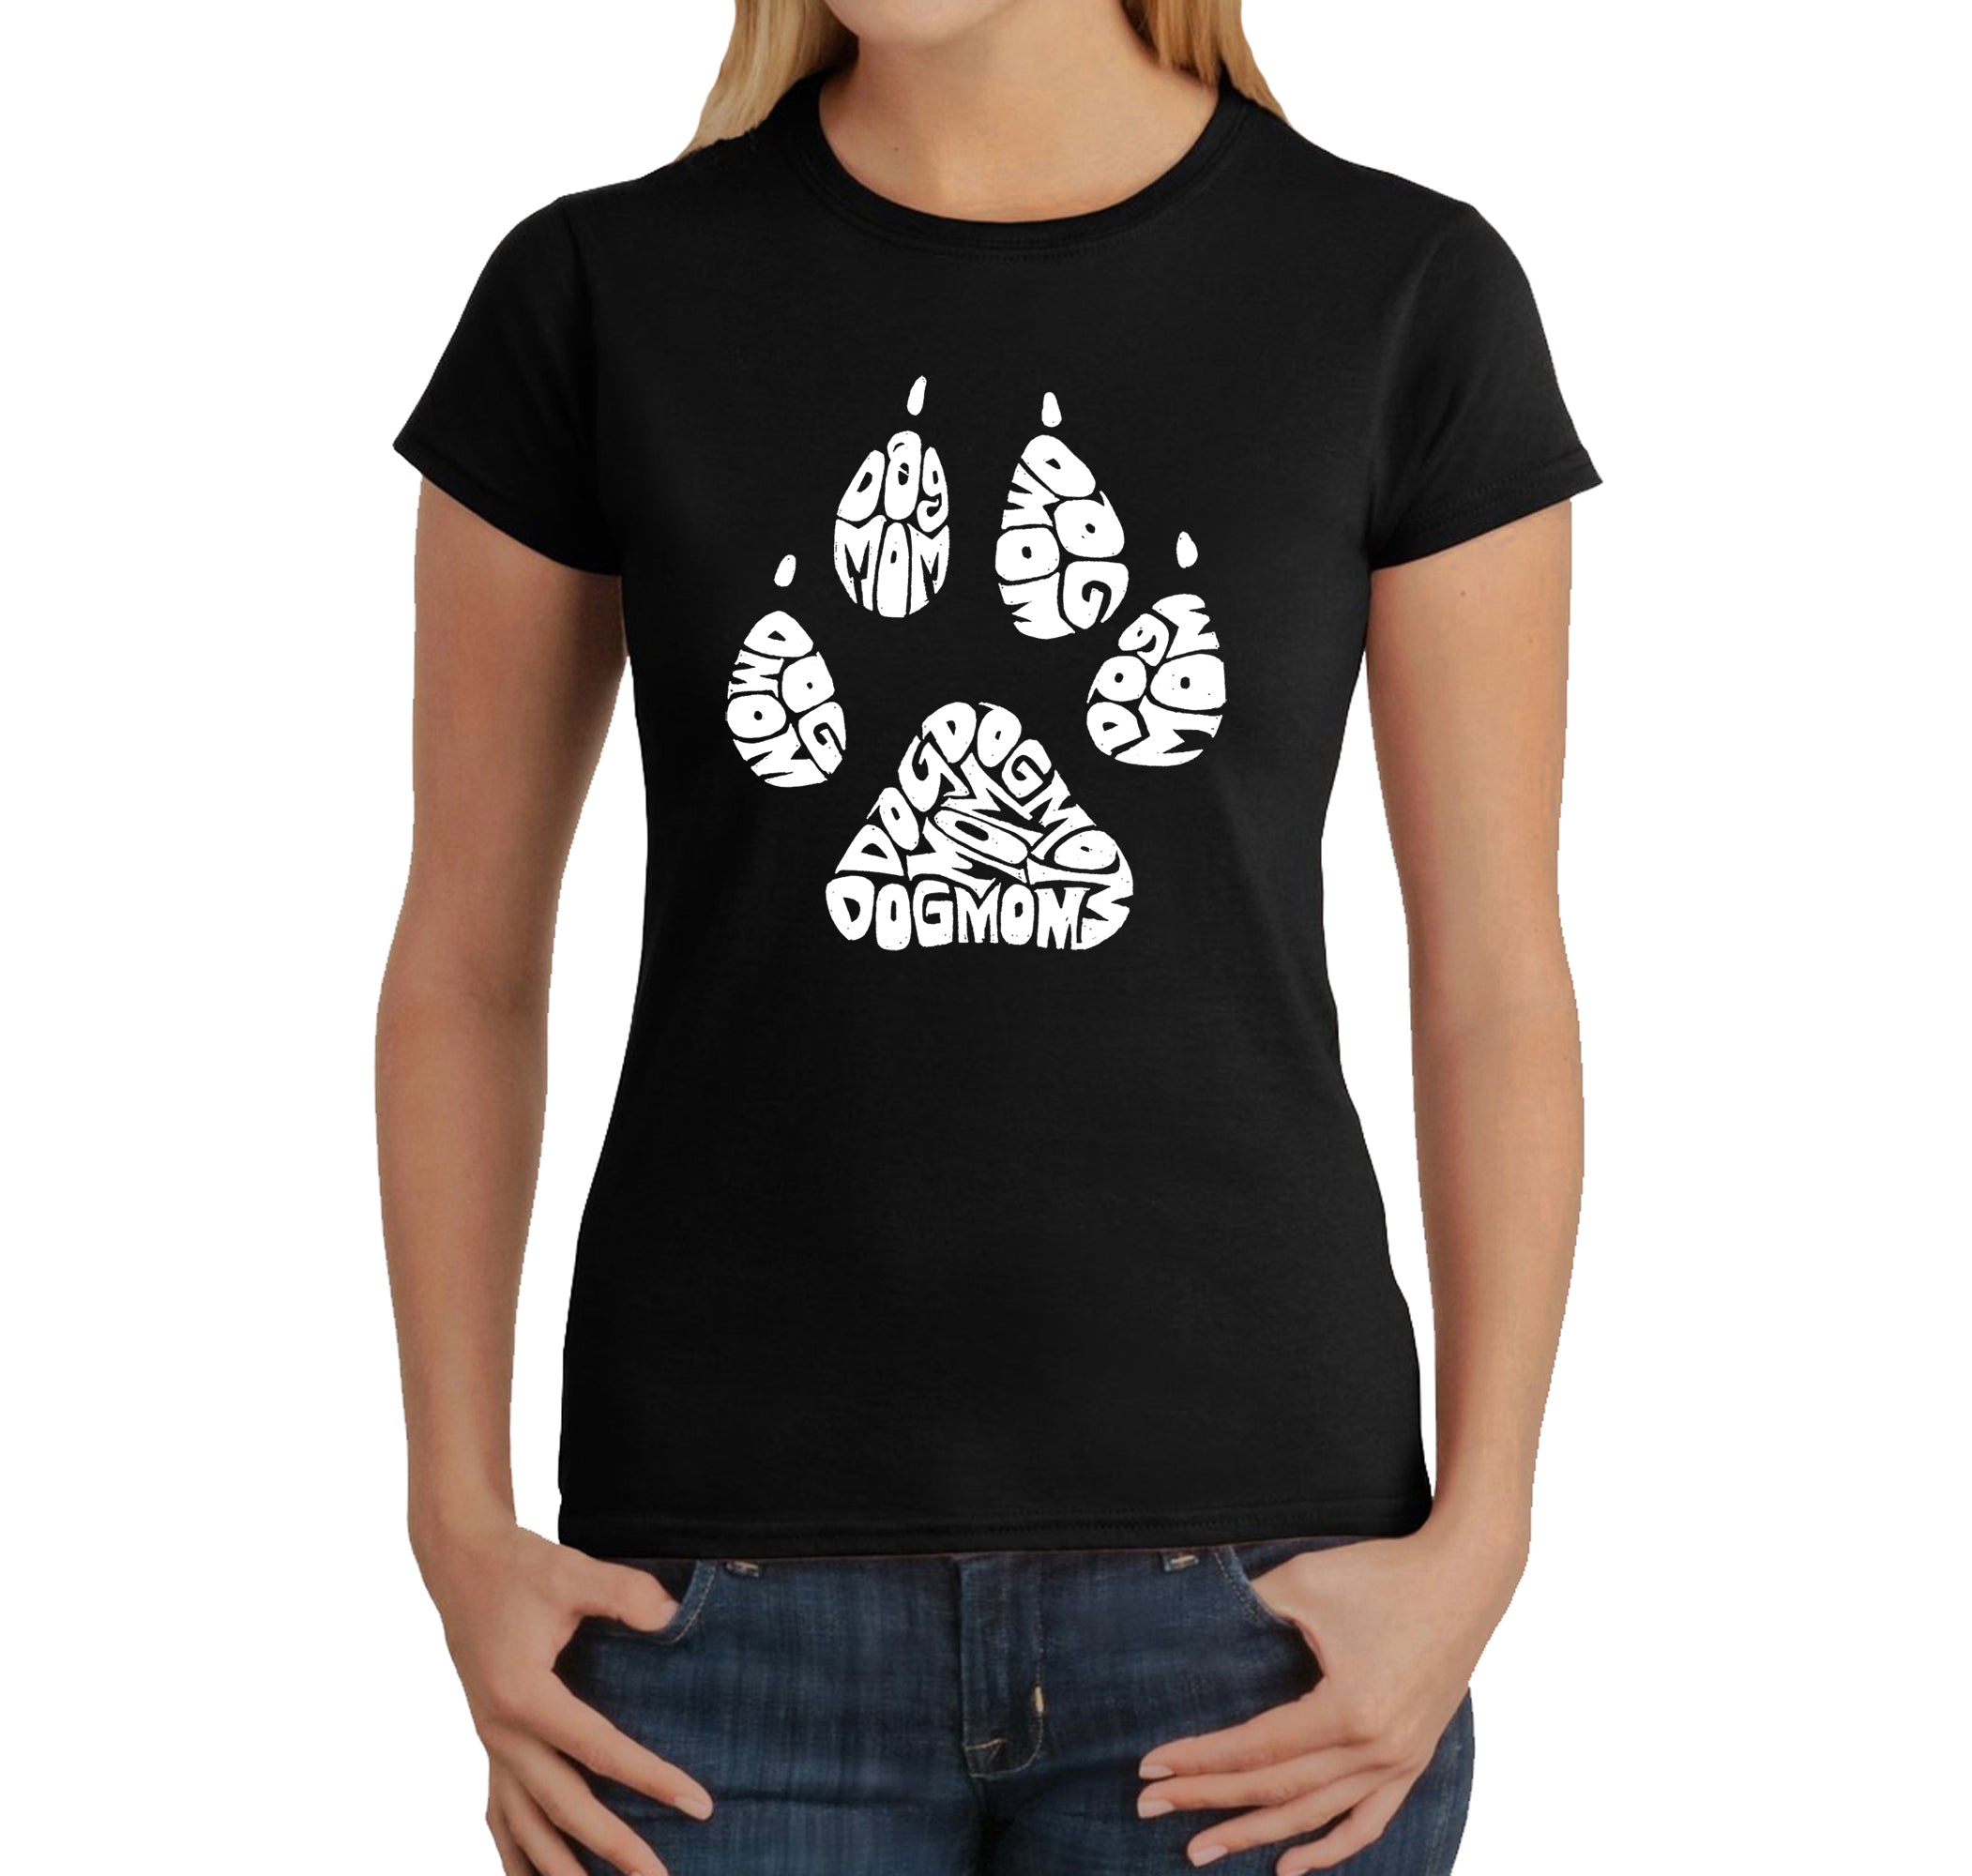 Dog Mom - Women's Word Art T-Shirt - Navy - XX-Large